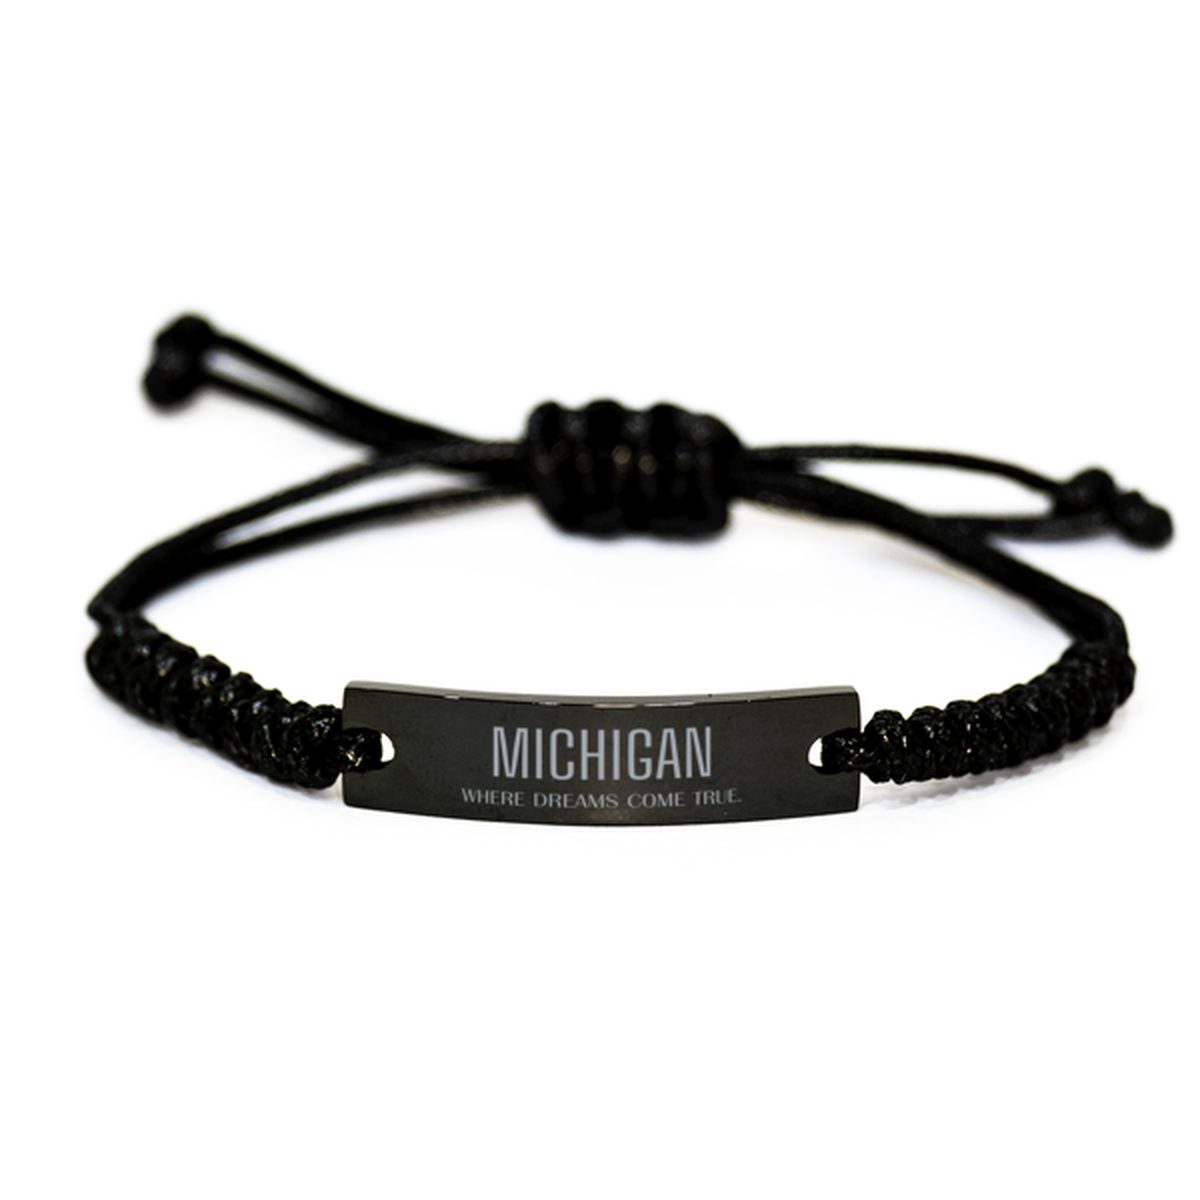 Love Michigan State Black Rope Bracelet, Michigan Where dreams come true, Birthday Inspirational Gifts For Michigan Men, Women, Friends